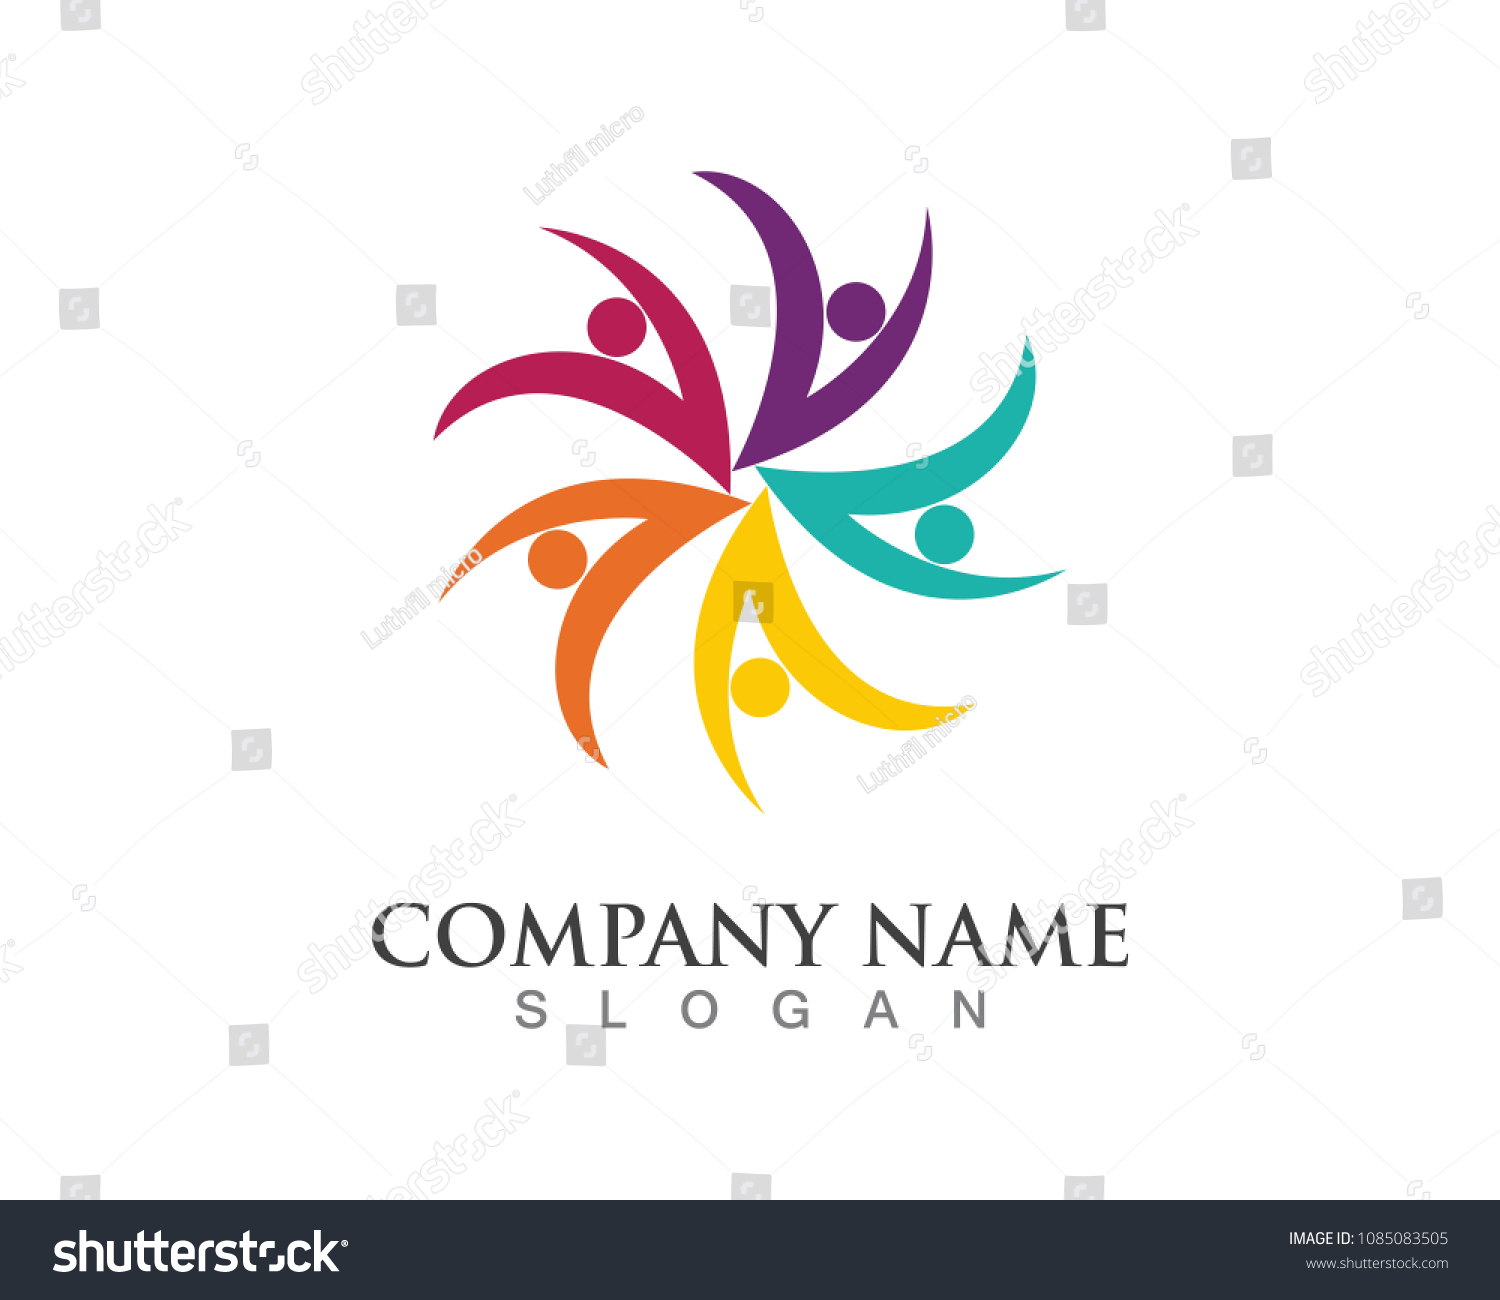 community care logos - Royalty Free Stock Vector 1085083505 - Avopix.com